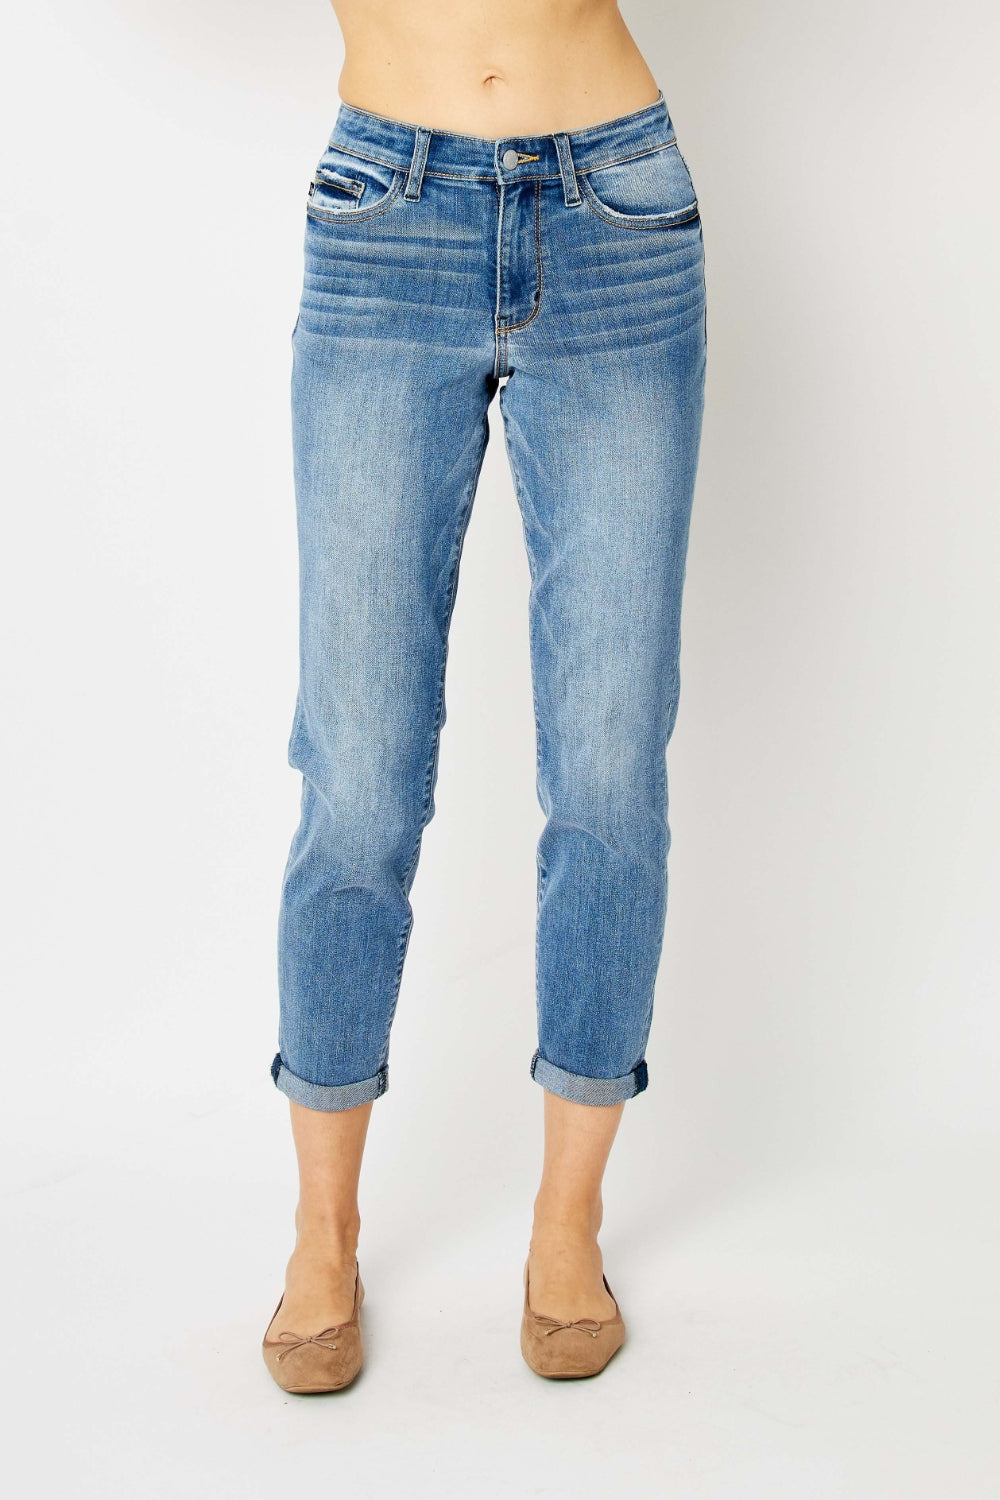 Judy Blue Full Size Cuffed Hem Slim Jeans - Sydney So Sweet